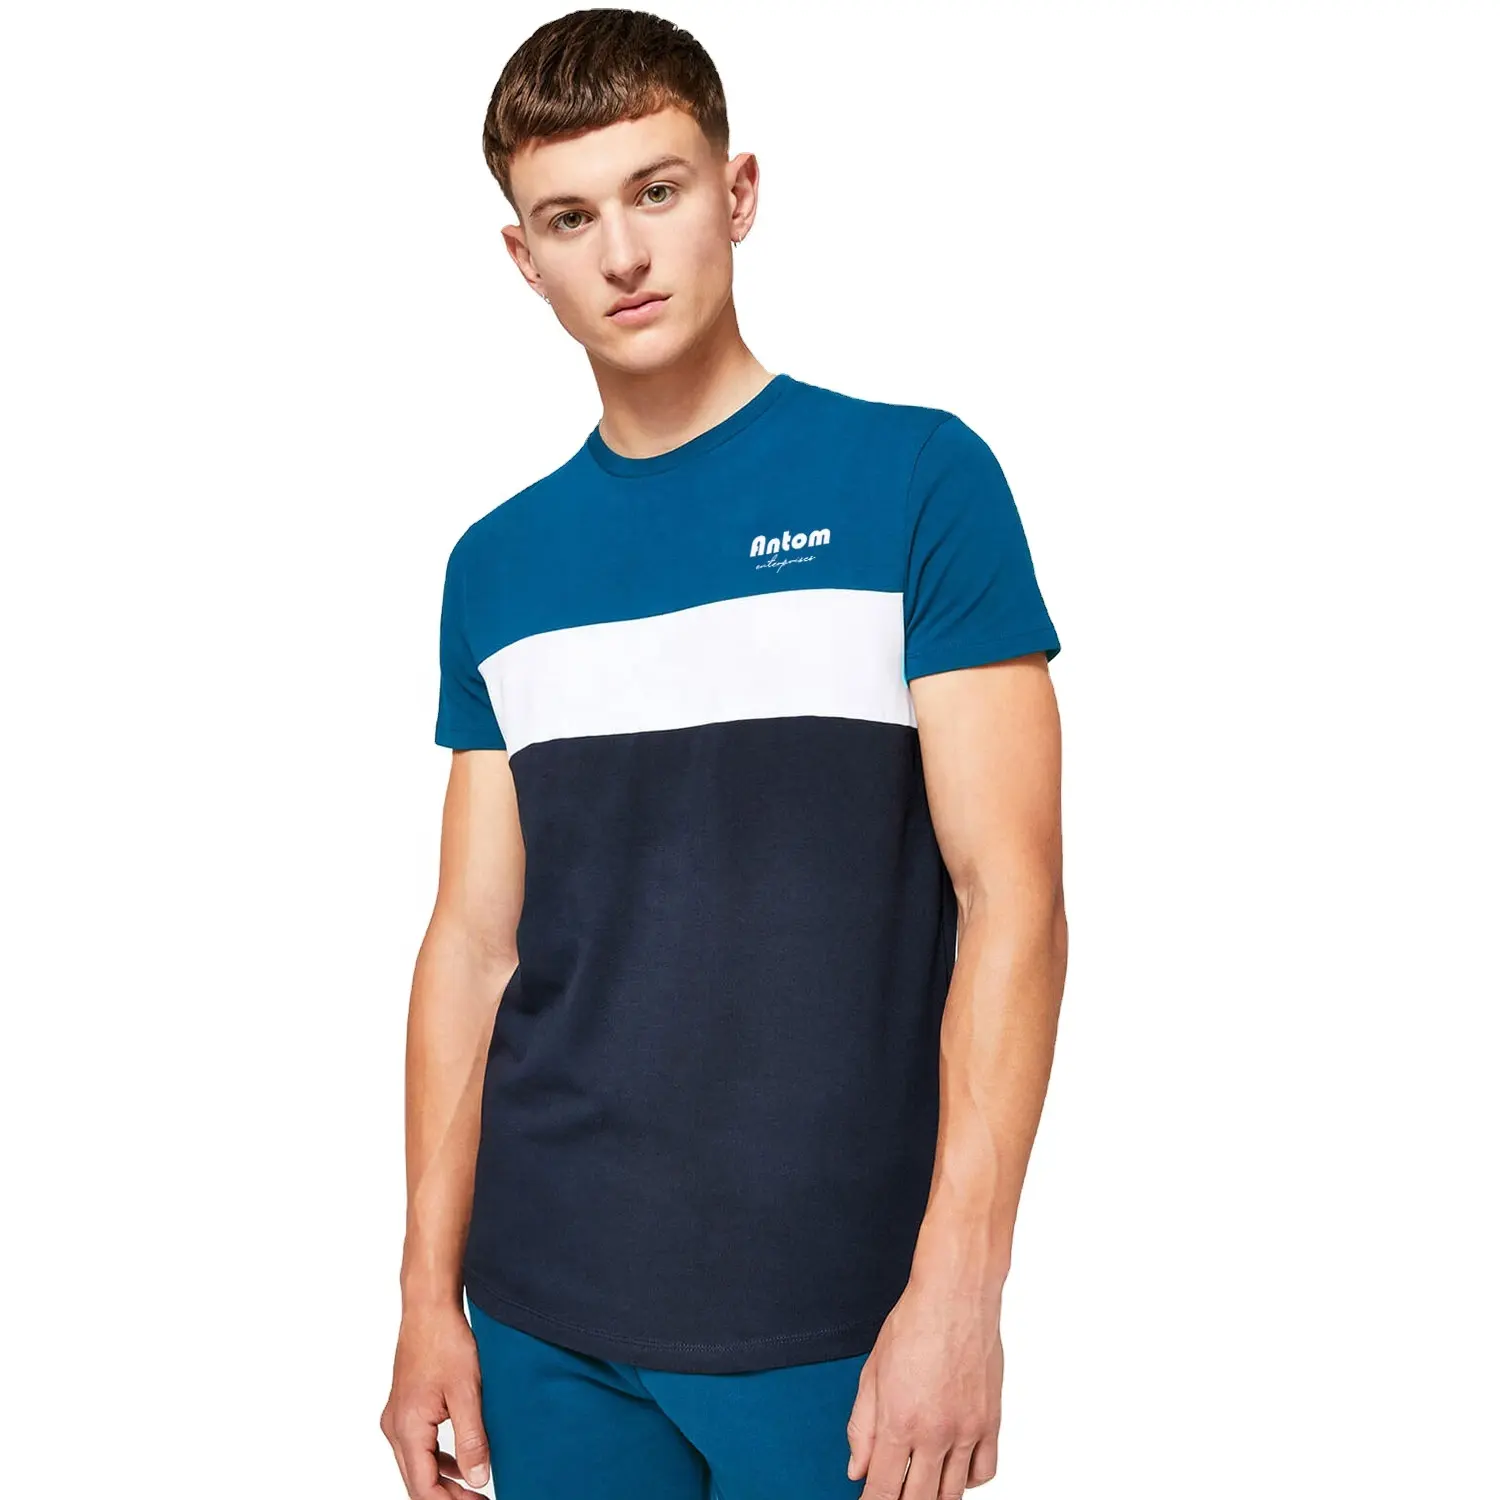 2023 Summer Cotton Men's T-Shirt Short-Sleeve Man T-Shirt Short Sleeve Pure Color s Clothing T-Shirts Tops Tee Men's Clothing